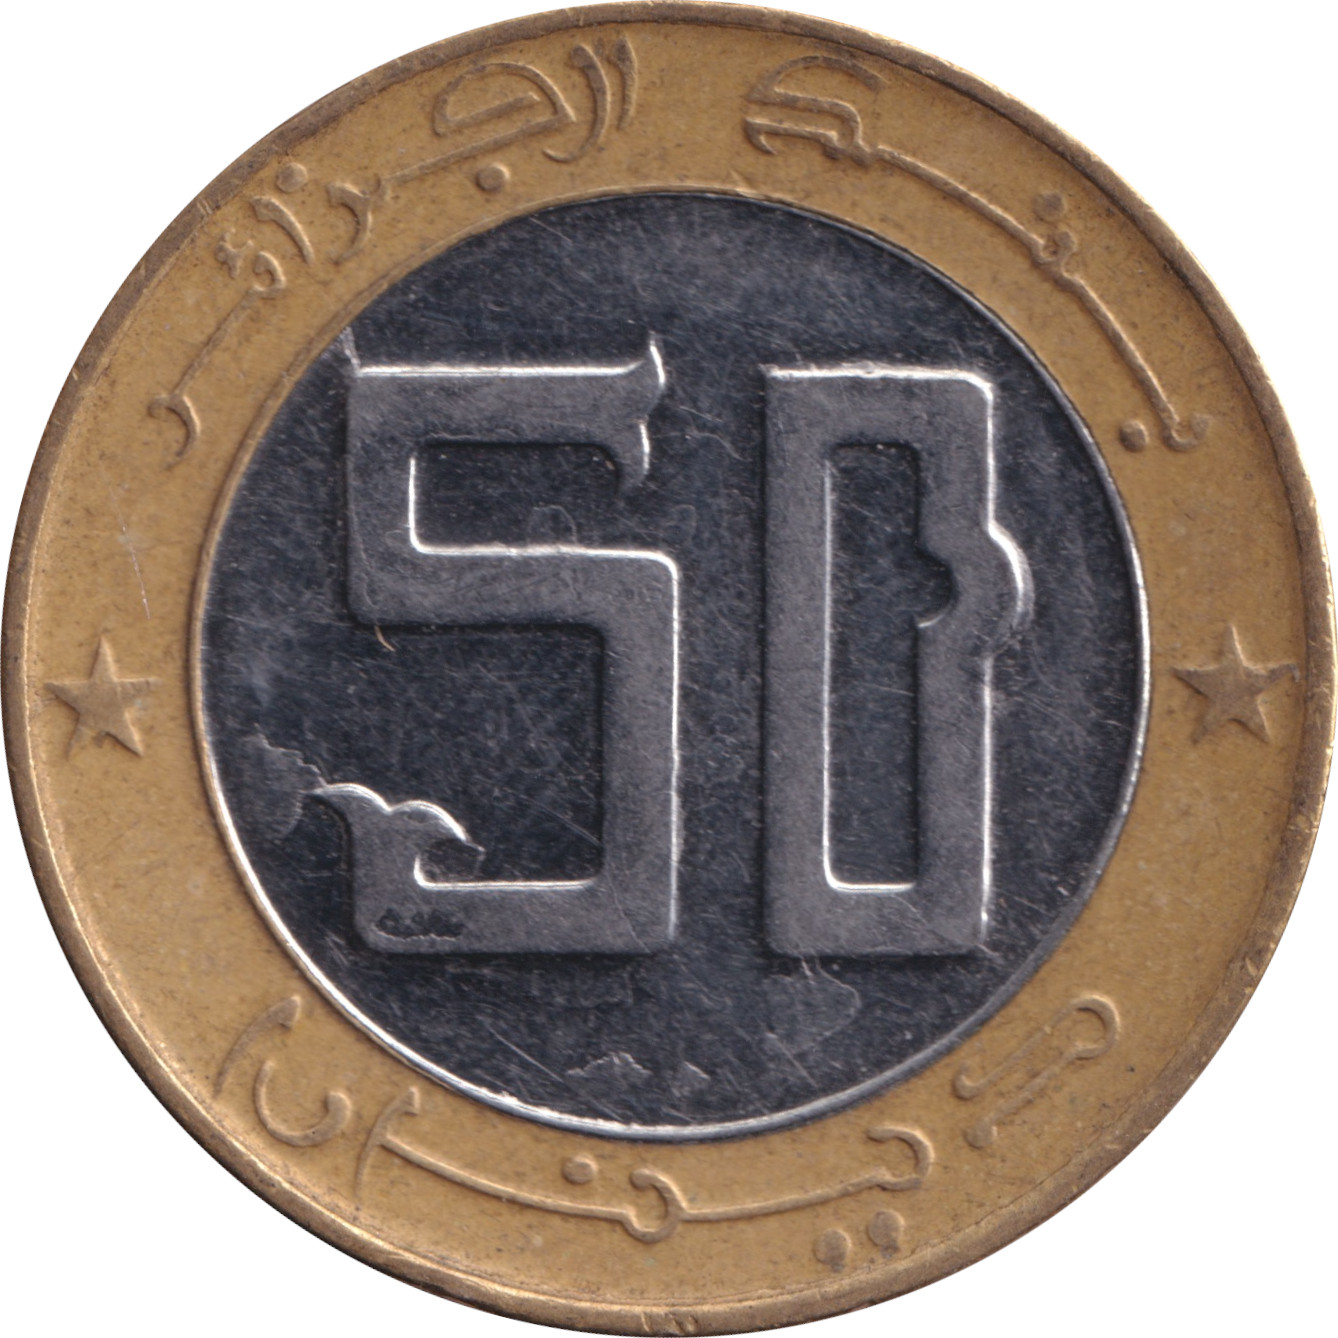 50 dinars - Gazelle